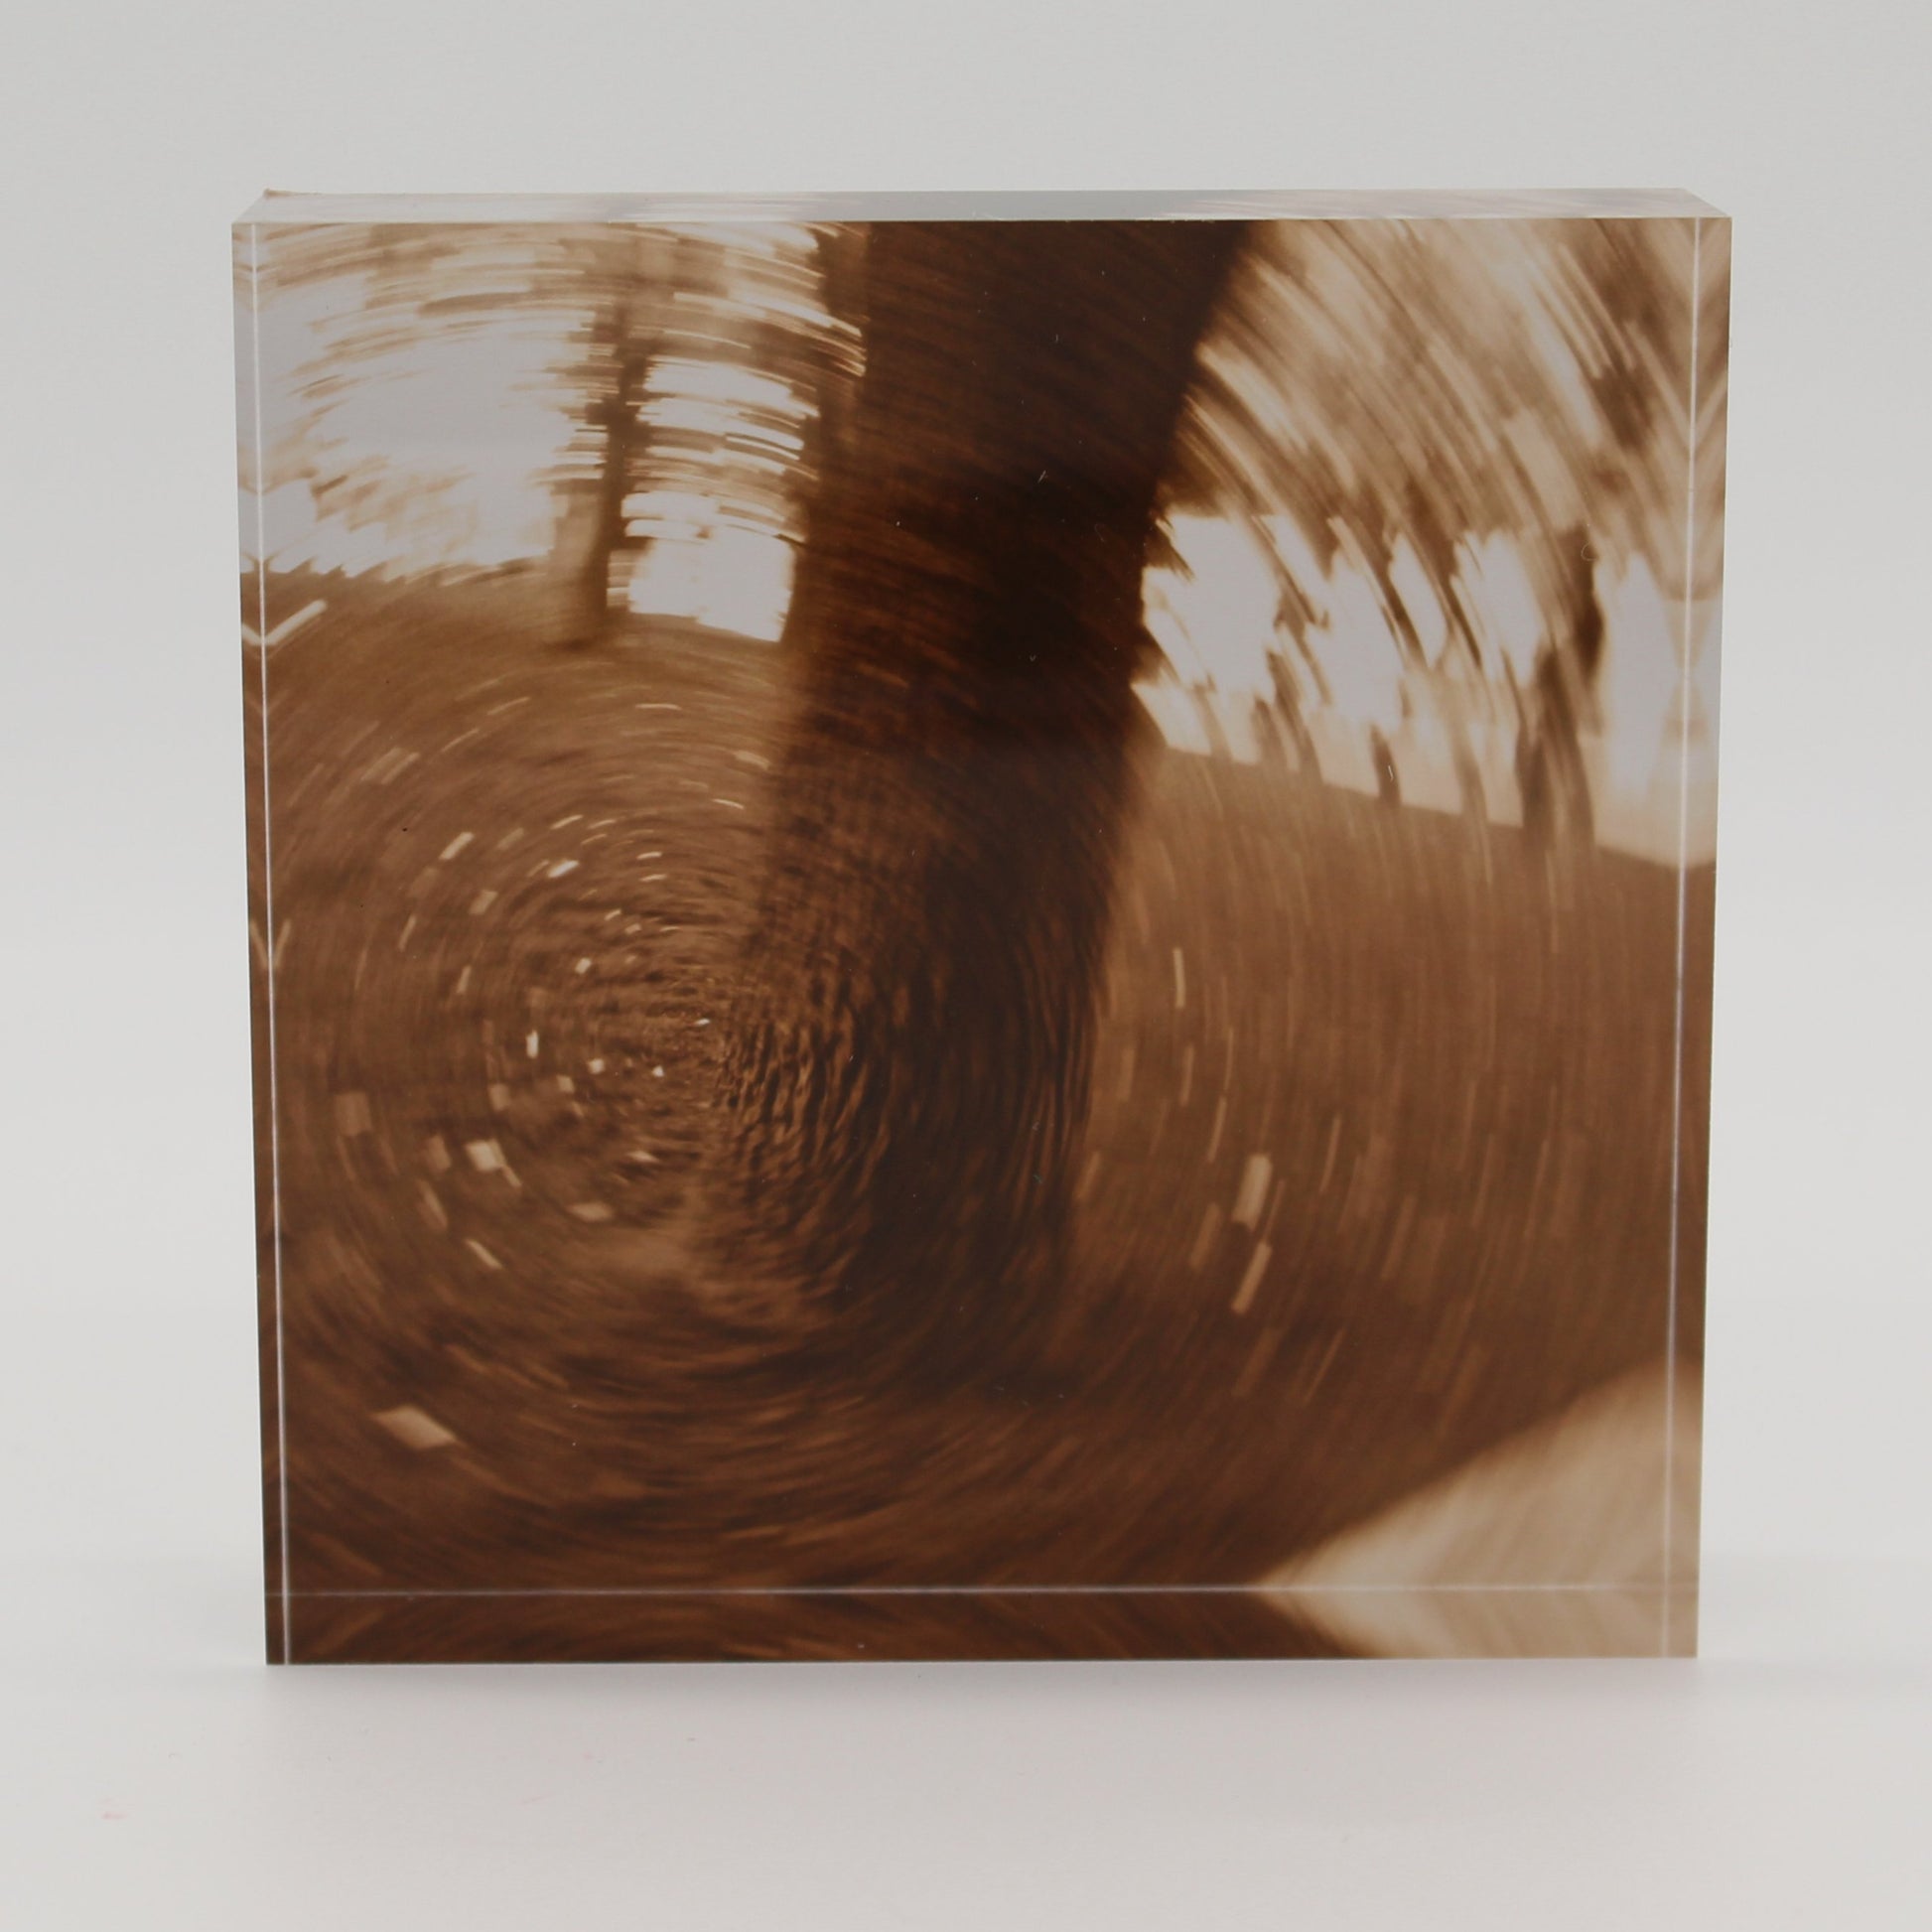 Acrylic block depicting tree trunk in motion